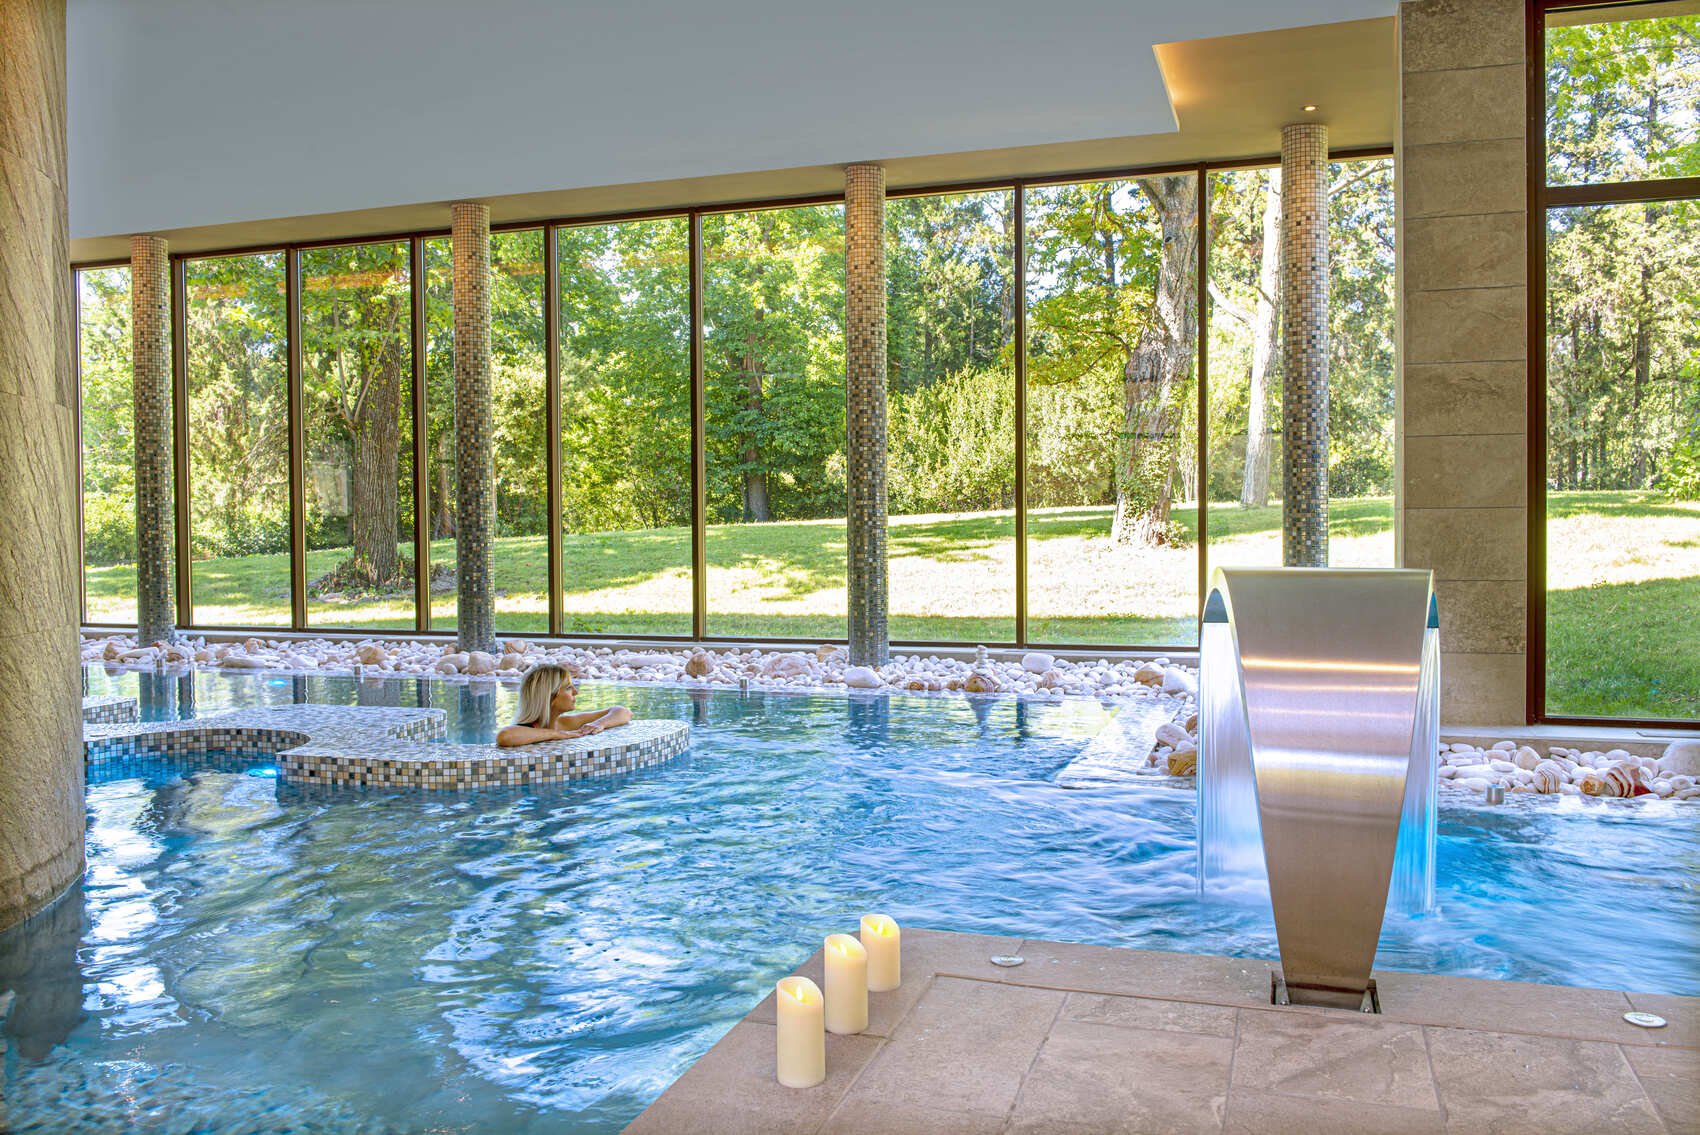 Luxury hotel in Provence, France - Château de Massillan 5* - Chef Mickael Furnion - Michelin-starred restaurant Le M - swimming pool